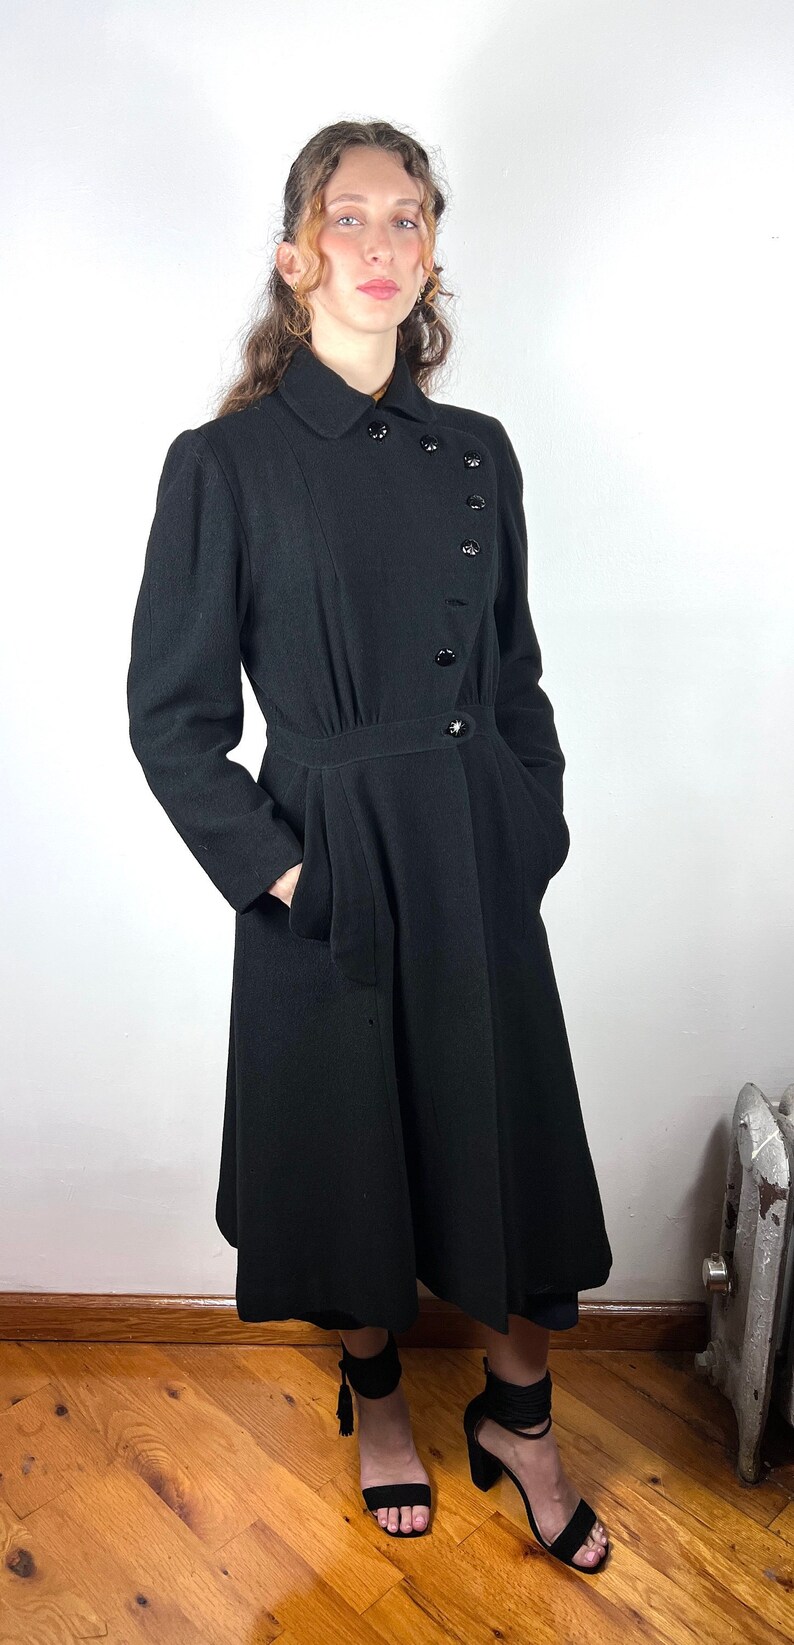 Vintage 1930s 1940s Long Coat Jacket / Vintage Boucle Black Coat Jacket / 40s Wool Suit Jacket / Rockabilly Pin Up Pinup VLV Large Medium image 2